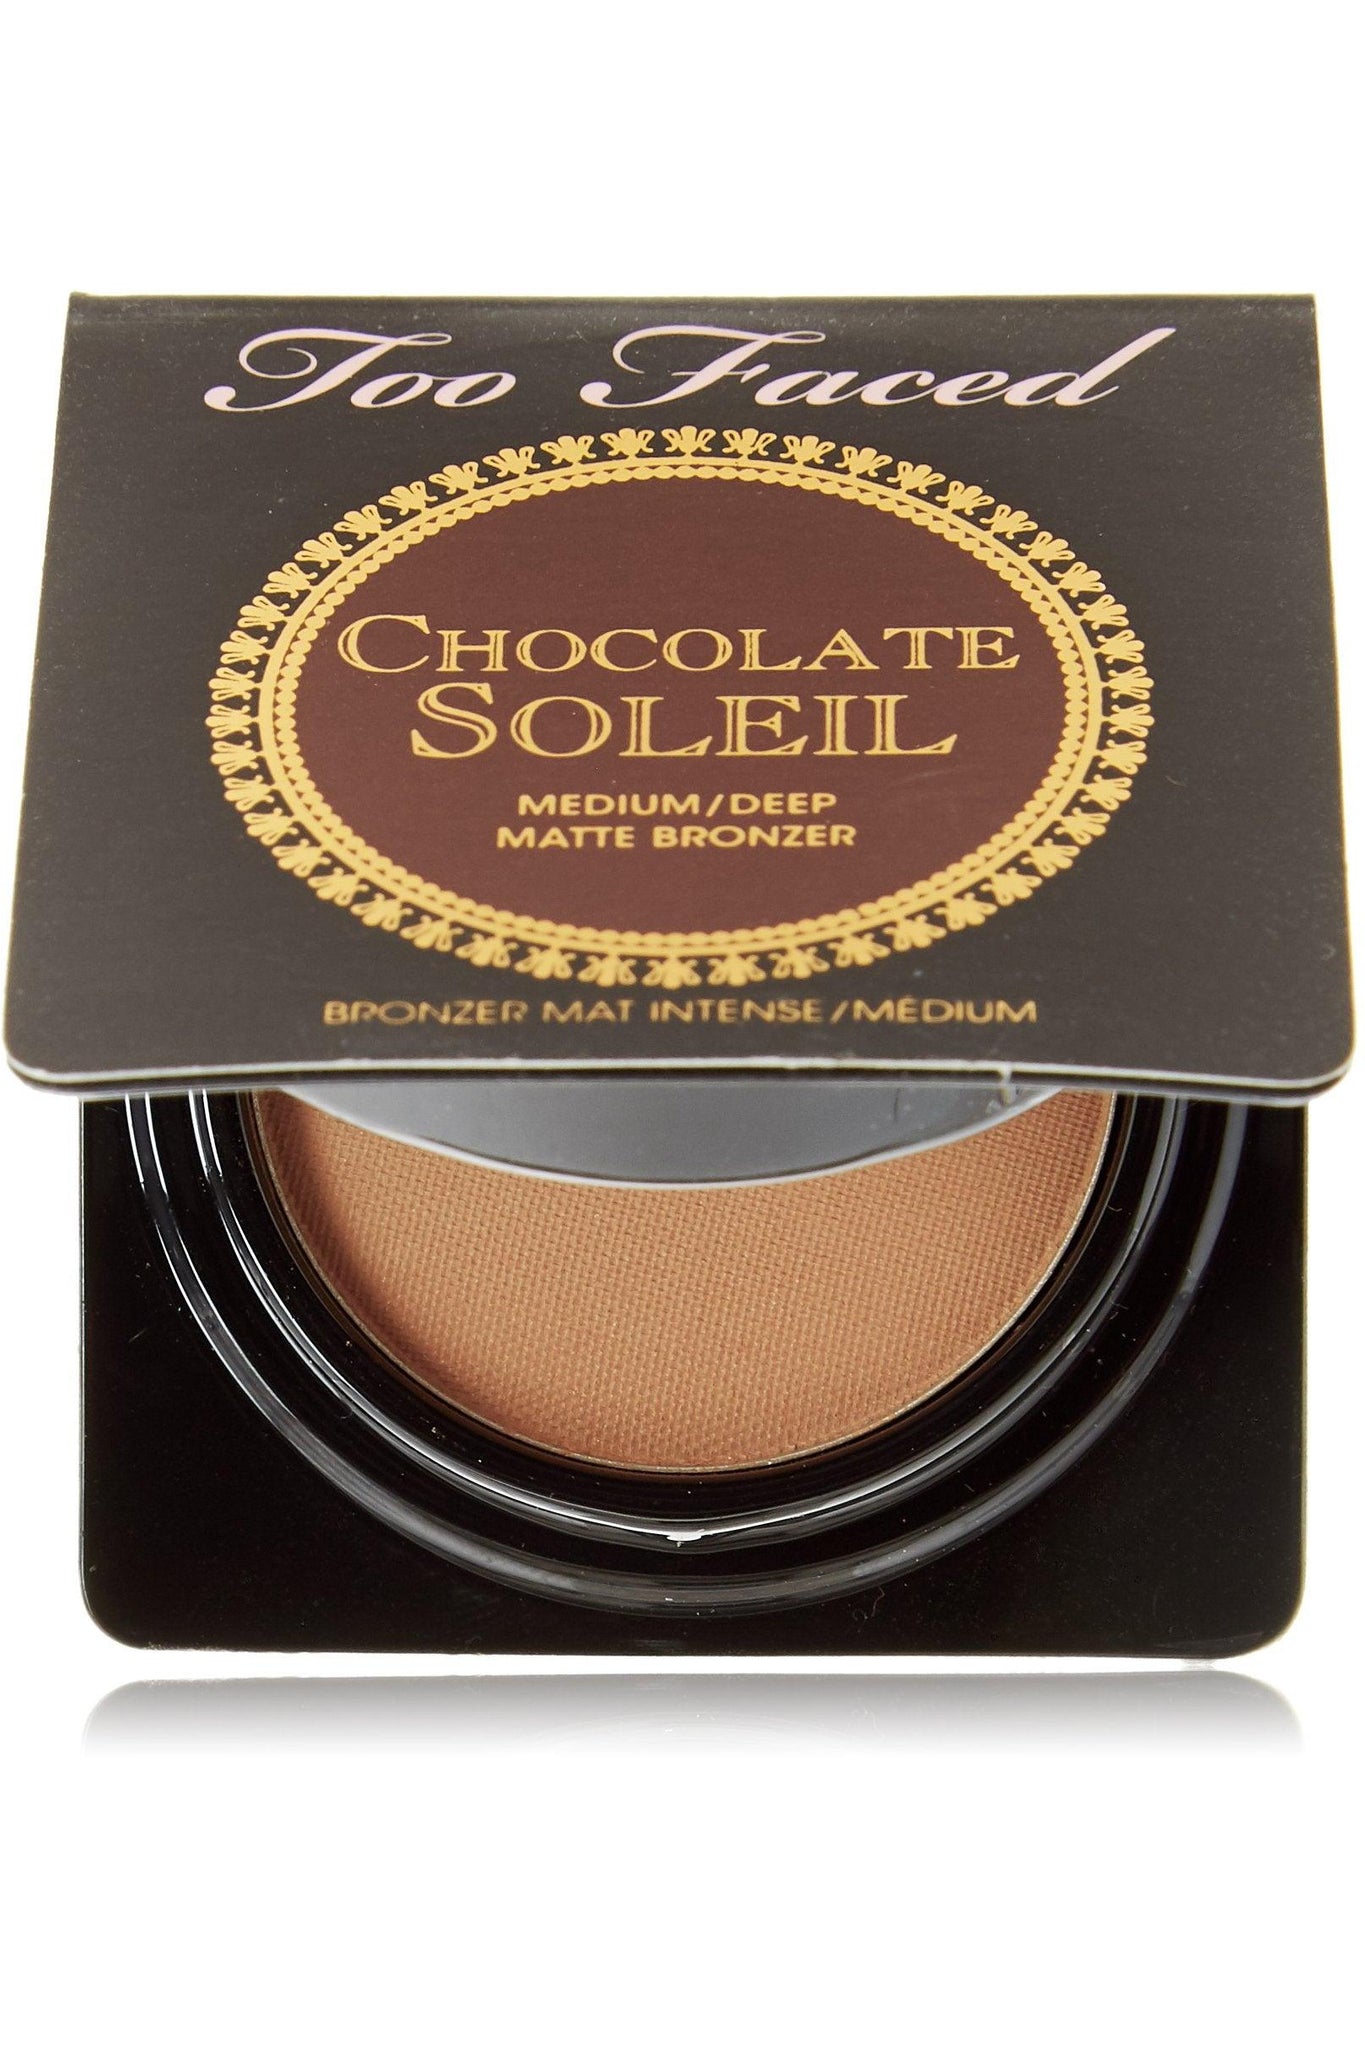 Buy Too Faced Chocolate Soleil Matte Bronzer - Medium/Deep in Pakistan